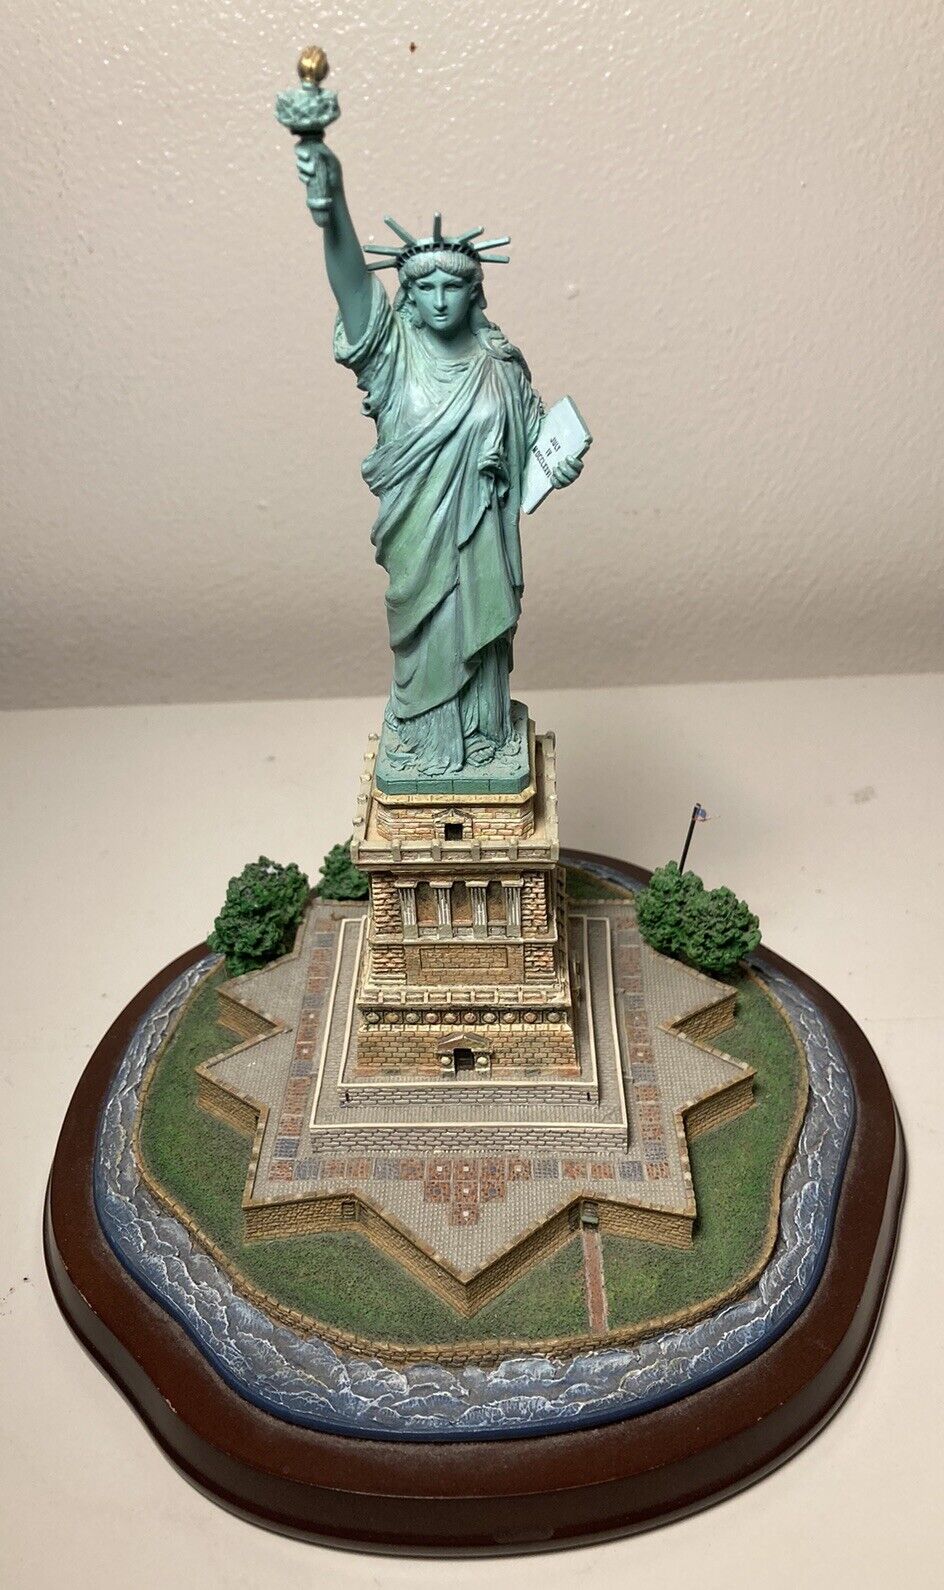 The Danbury Mint Brand Decorative Statue Of Liberty Collectible Figurine